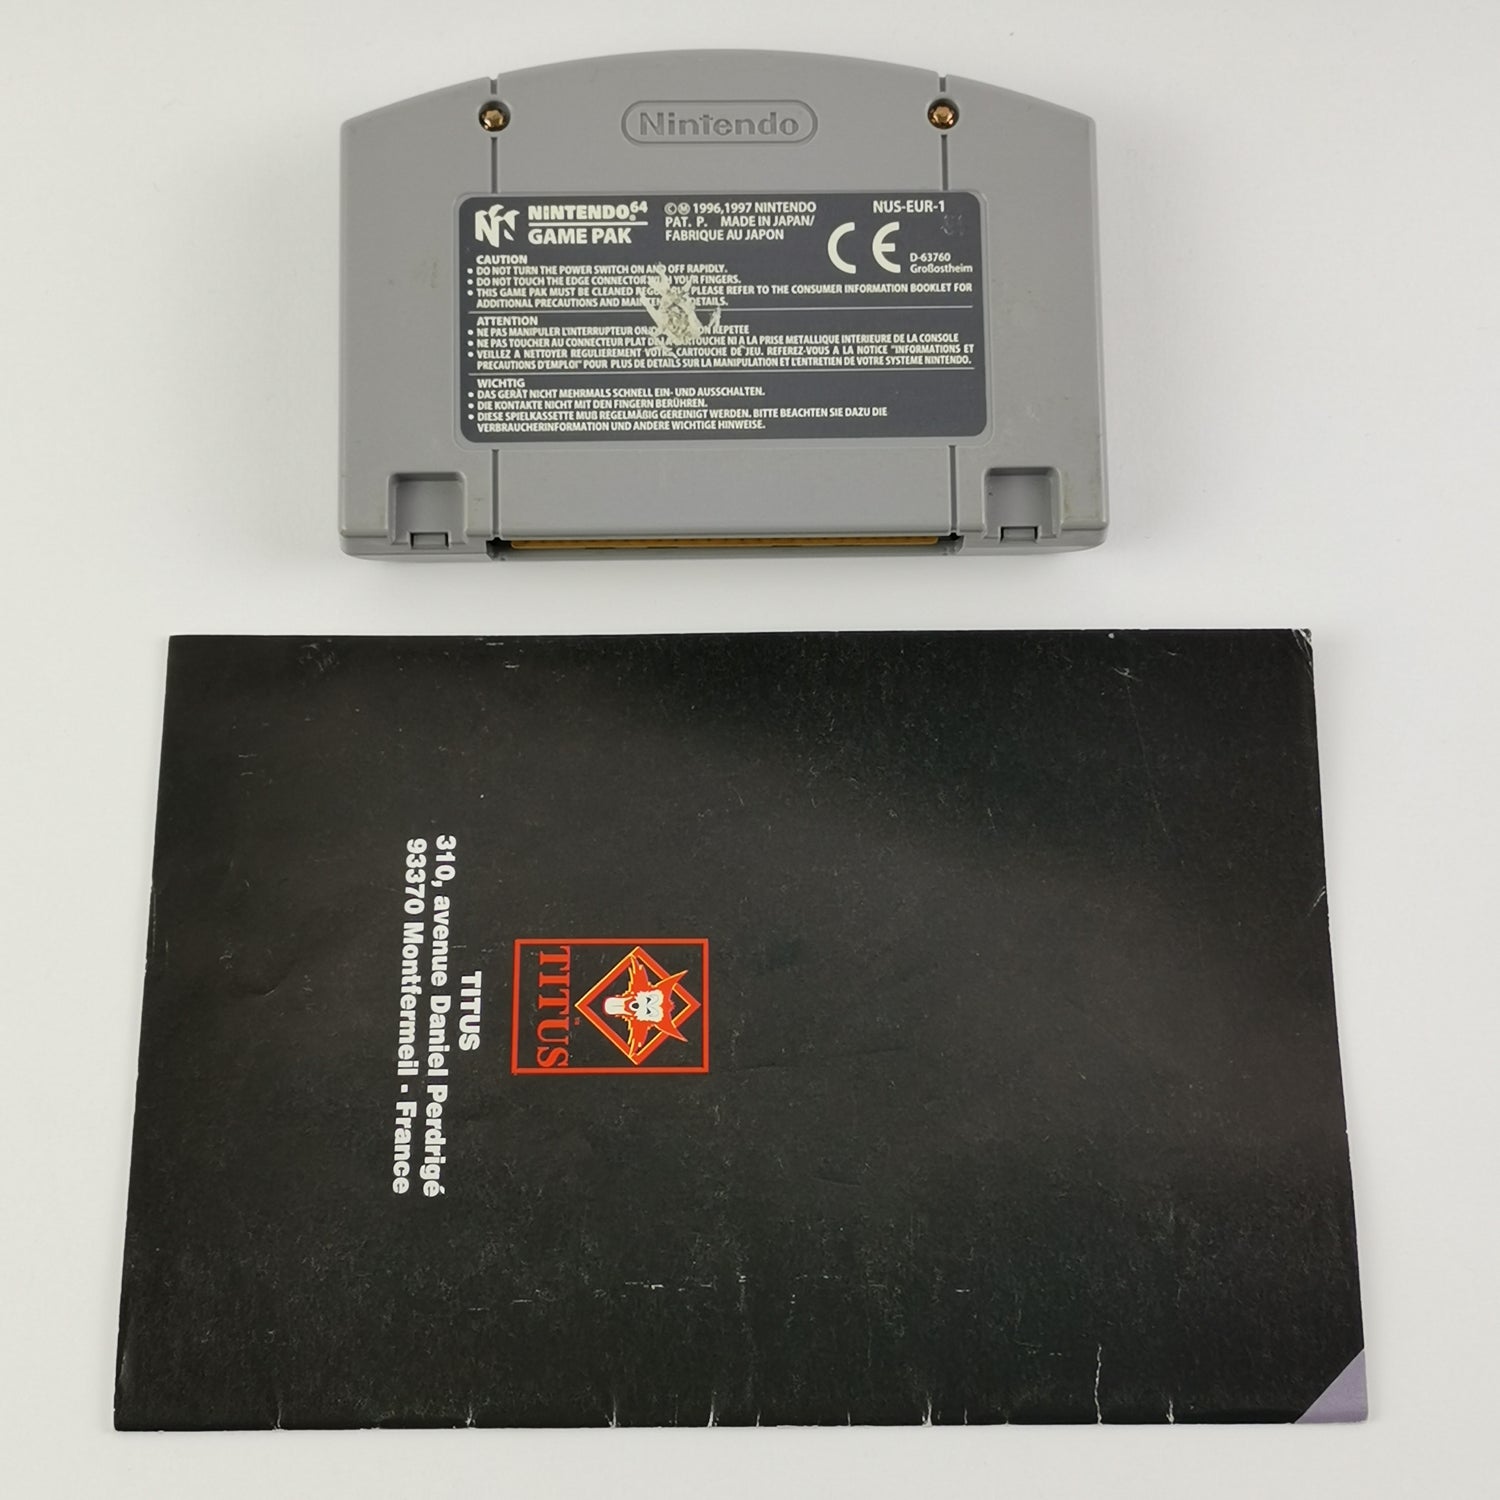 Nintendo 64 game: Virtual Chess 64 - module / cartridge + manual | N64 PAL